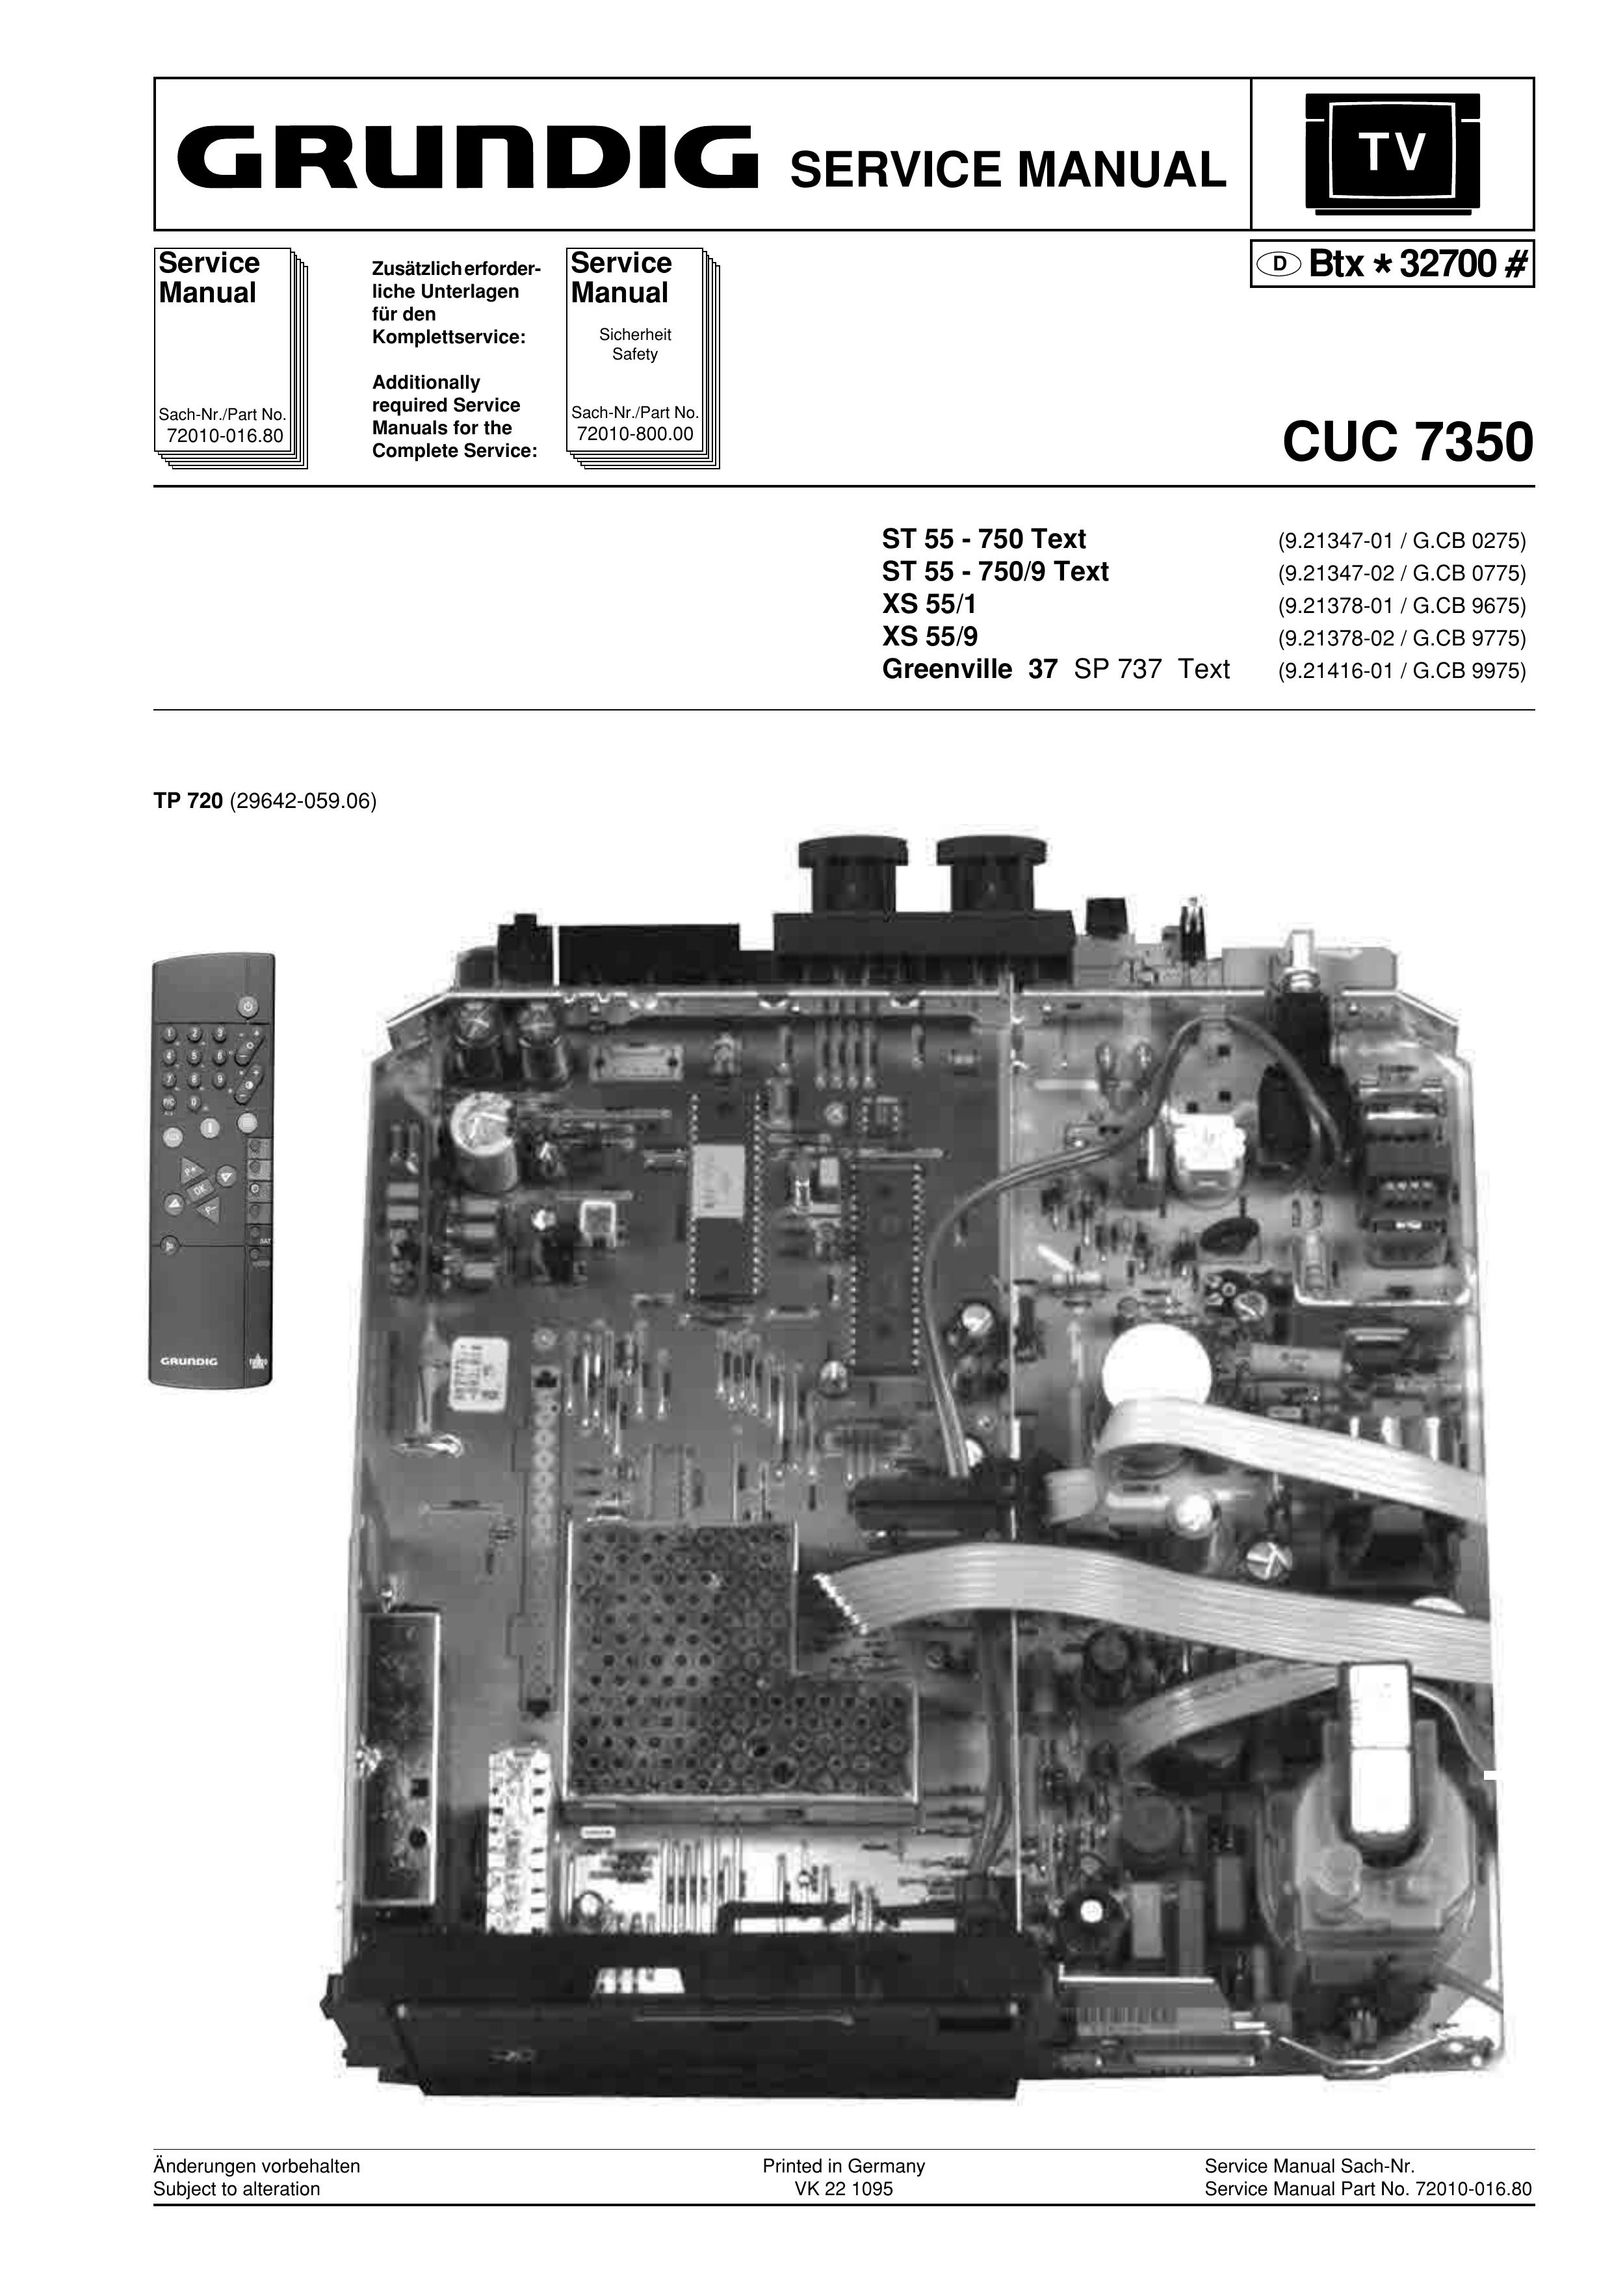 Grundig XS 55/9 Network Card User Manual